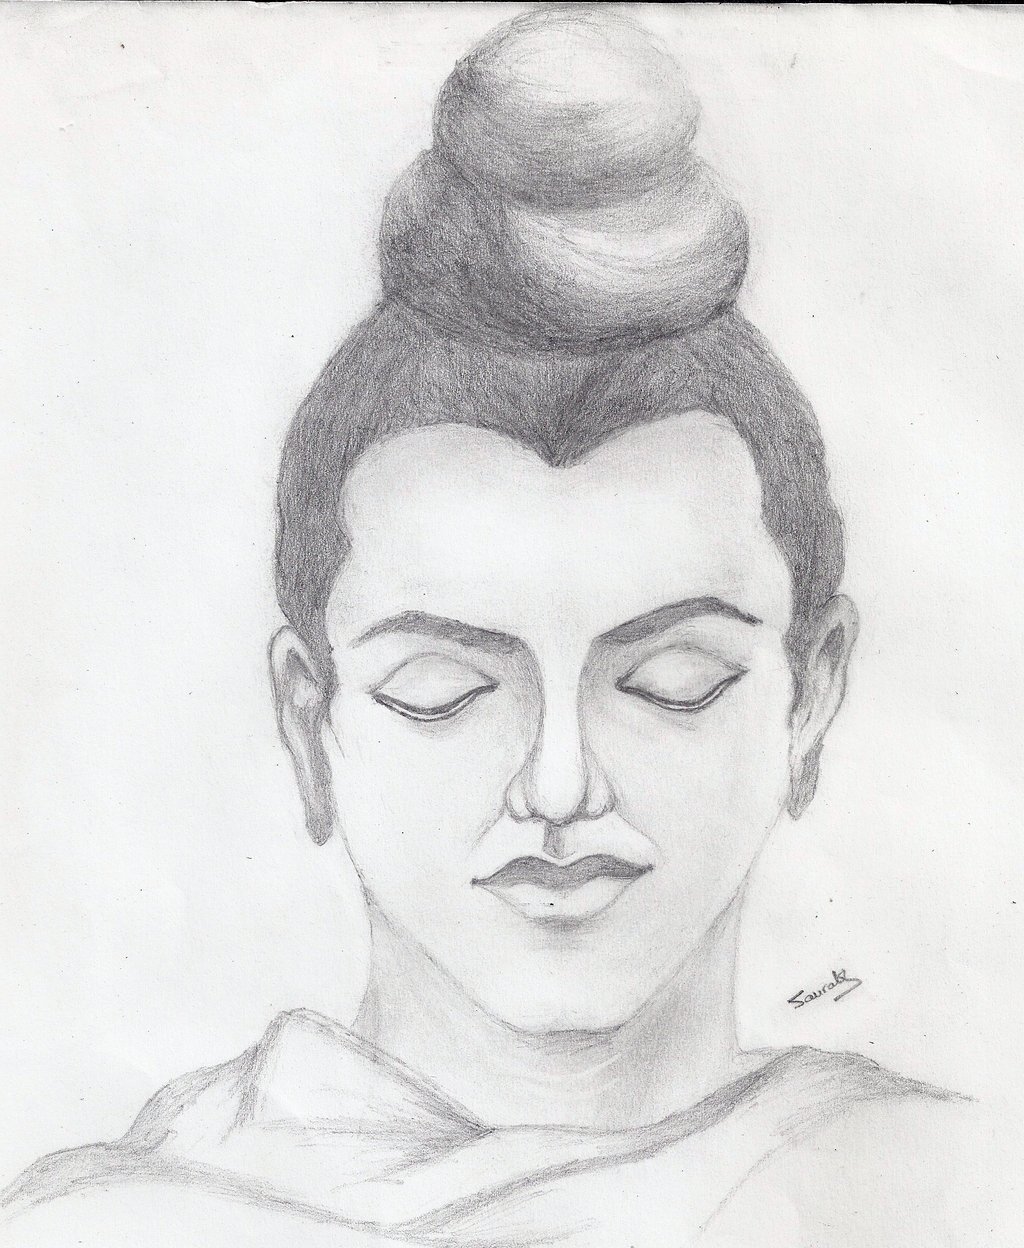 Free Buddha Sketch Download Free Clip Art Free Clip Art